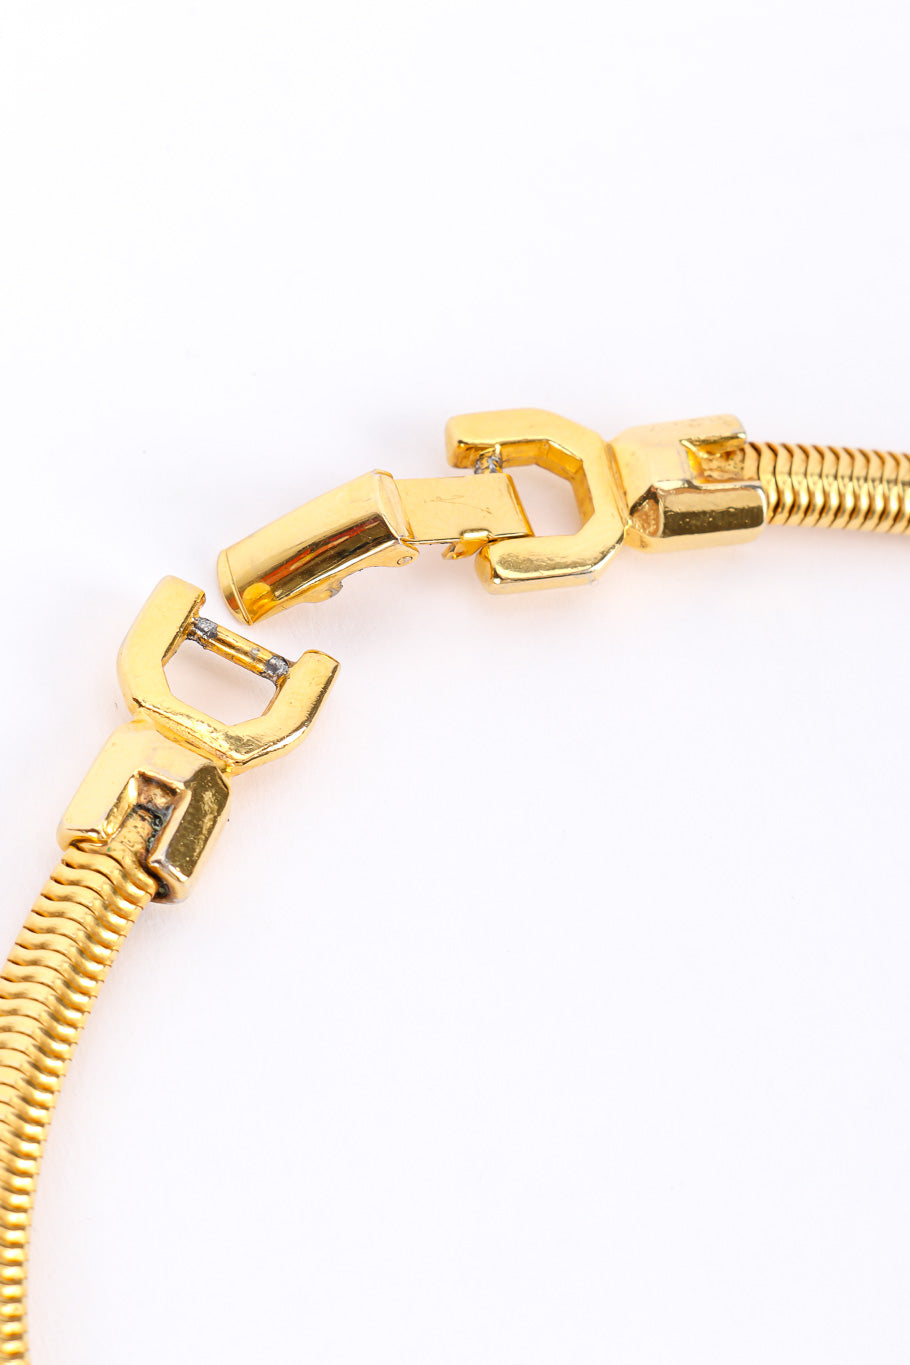 Vintage Pierre Cardin Revolving Charm Tablet Necklace fold over clasp open closeup @Recessla